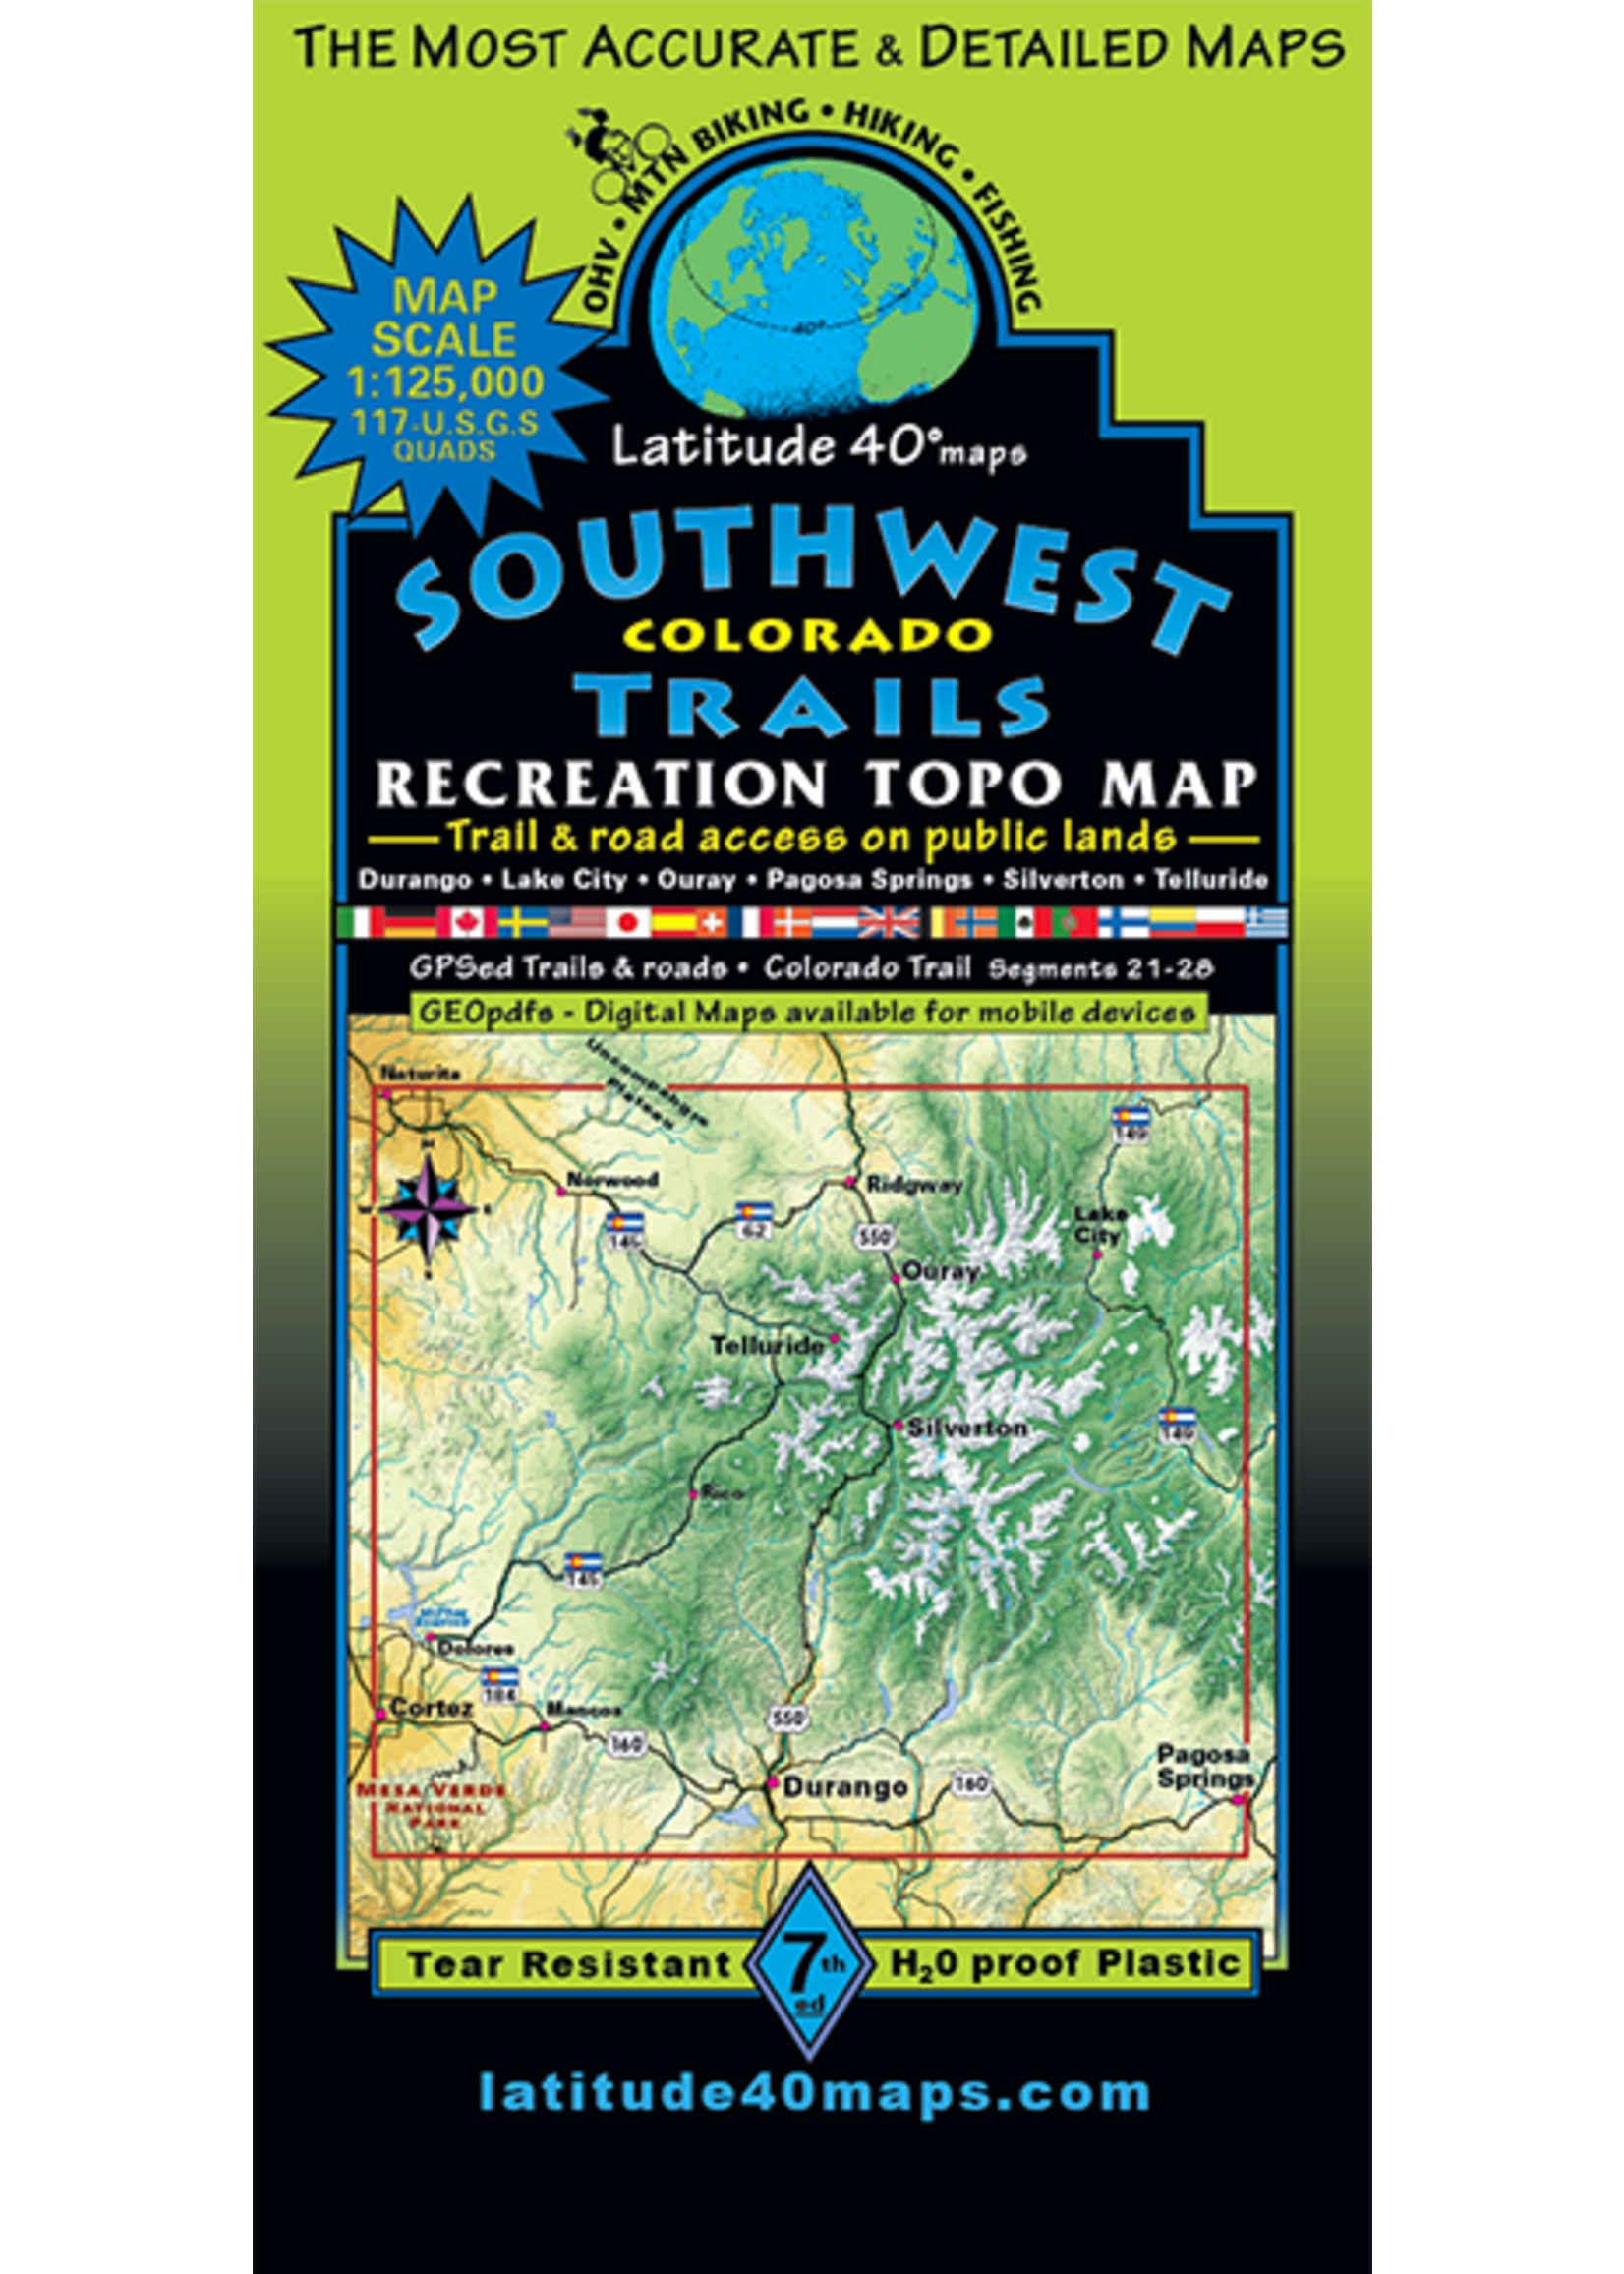 Southwest Colorado Trails Map